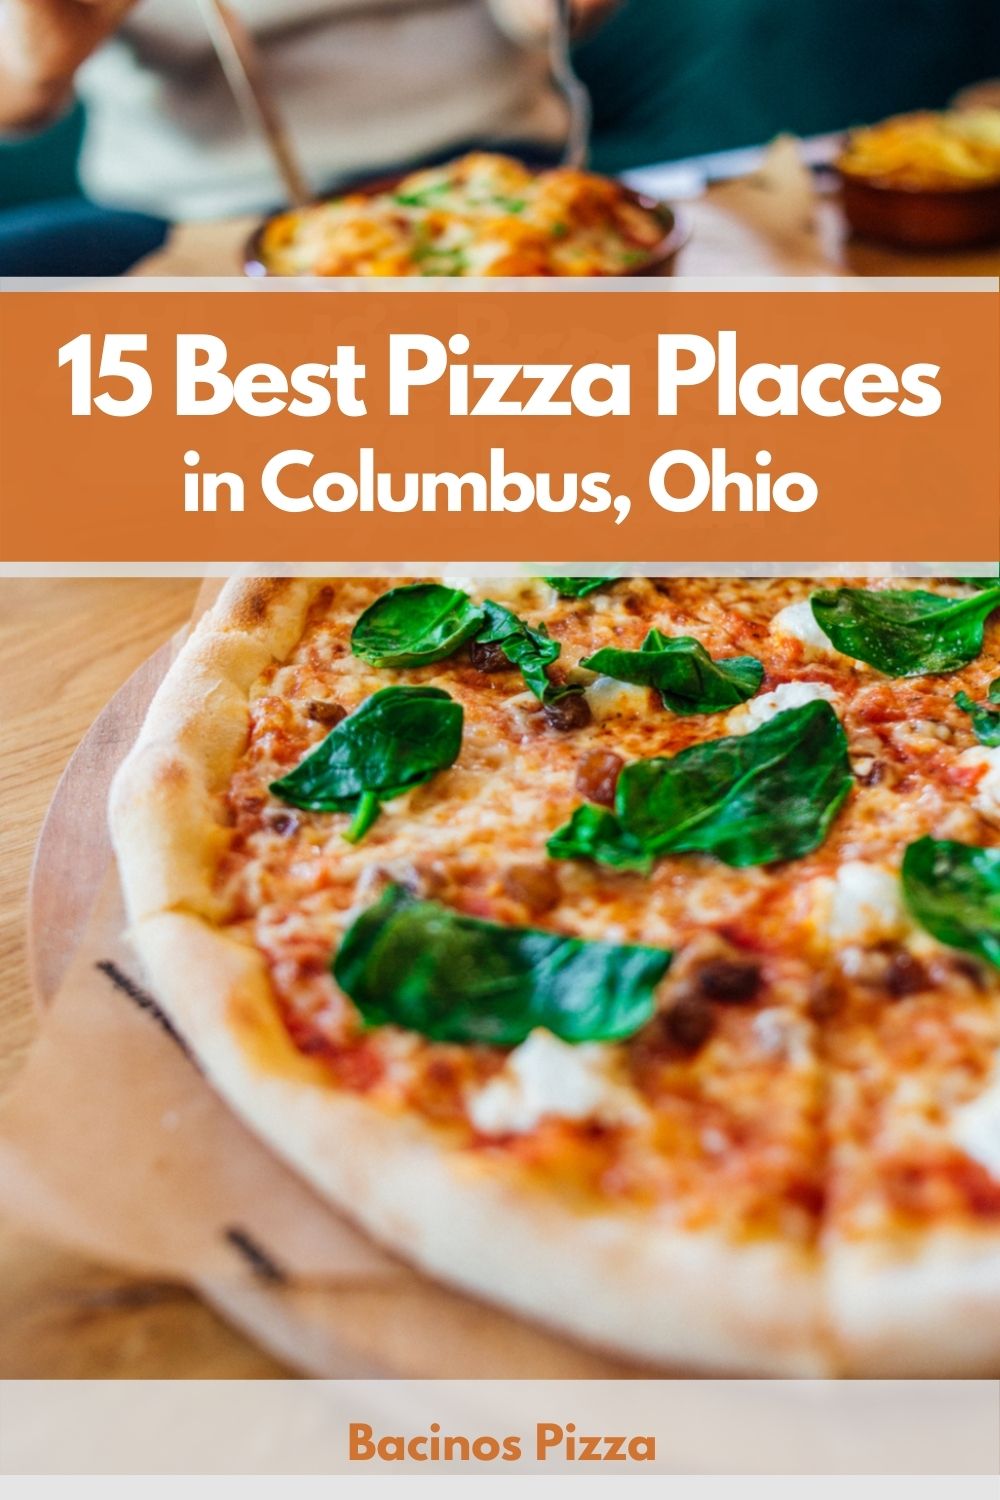 15 Best Pizza Places in Columbus, Ohio pin